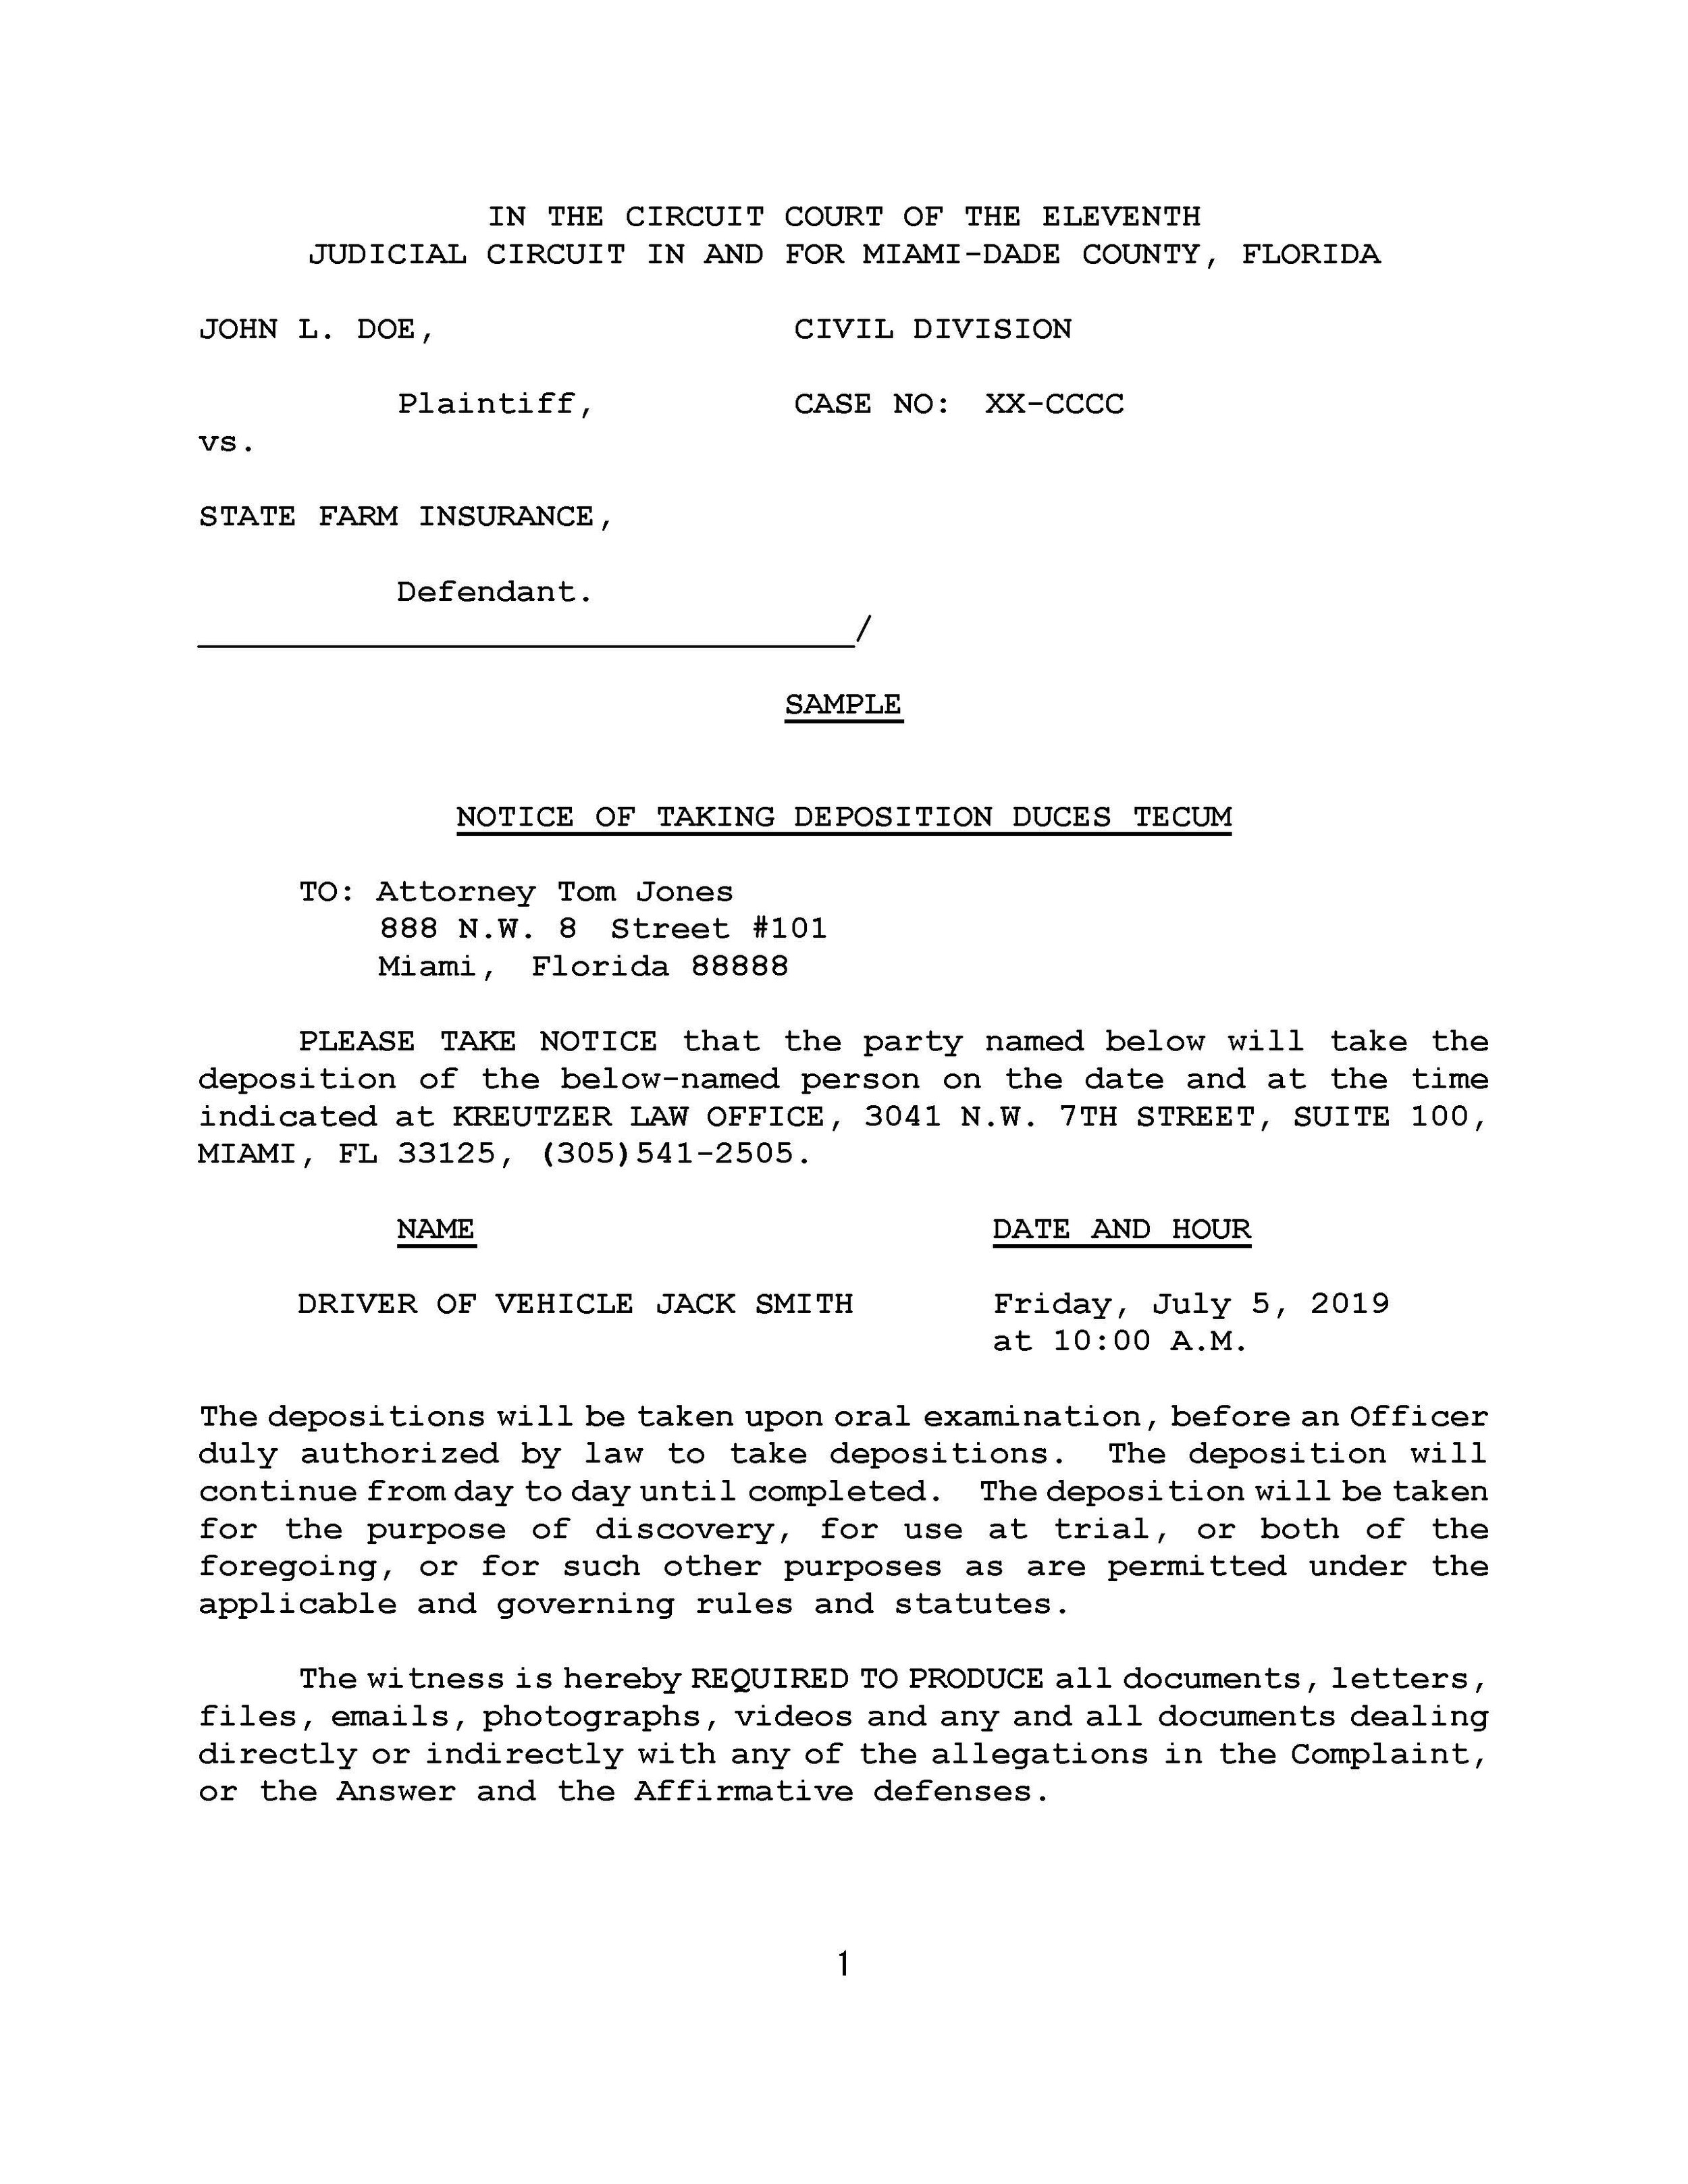 Kreutzer-Law-Attorney-Miami-Lawyers-Depo notice.not_Page_1.jpg